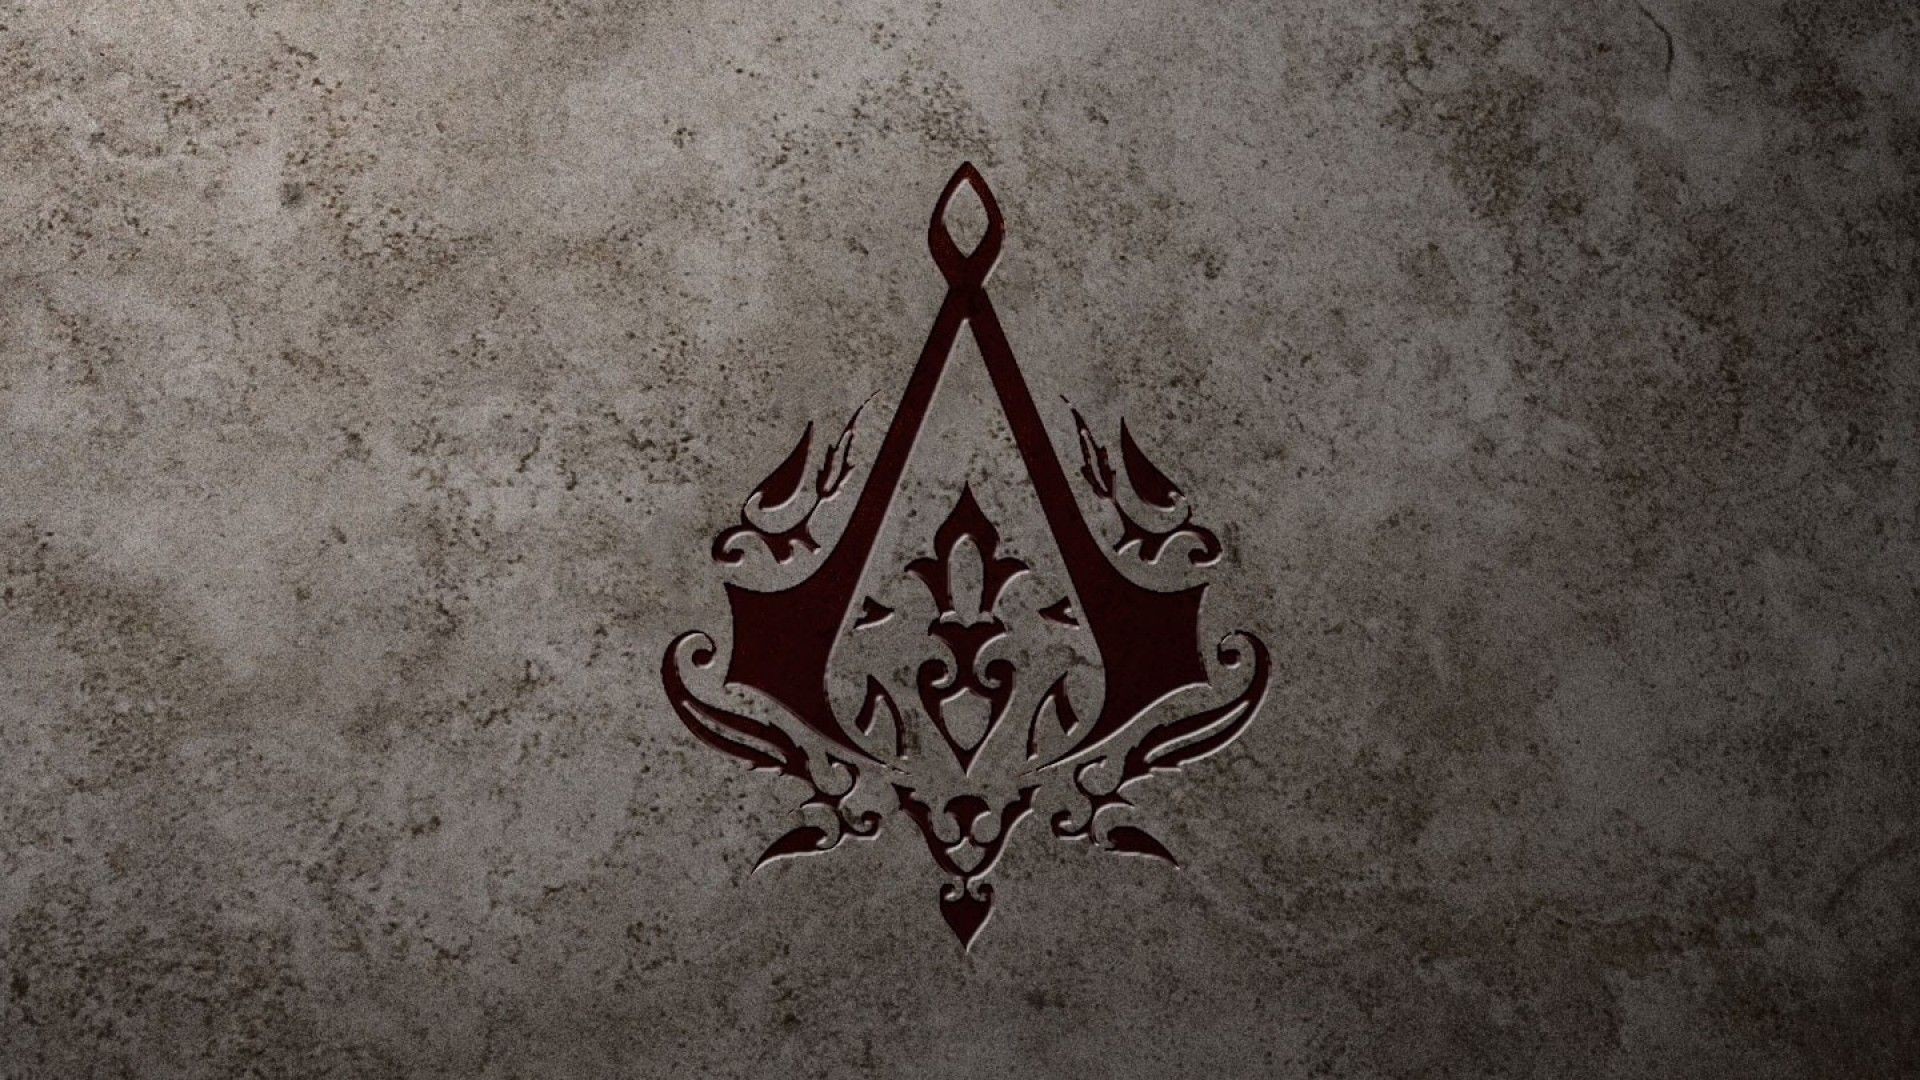 Assassins Creed Logo Wallpaper Hd 1920x1080 Wallpaper Teahub Io